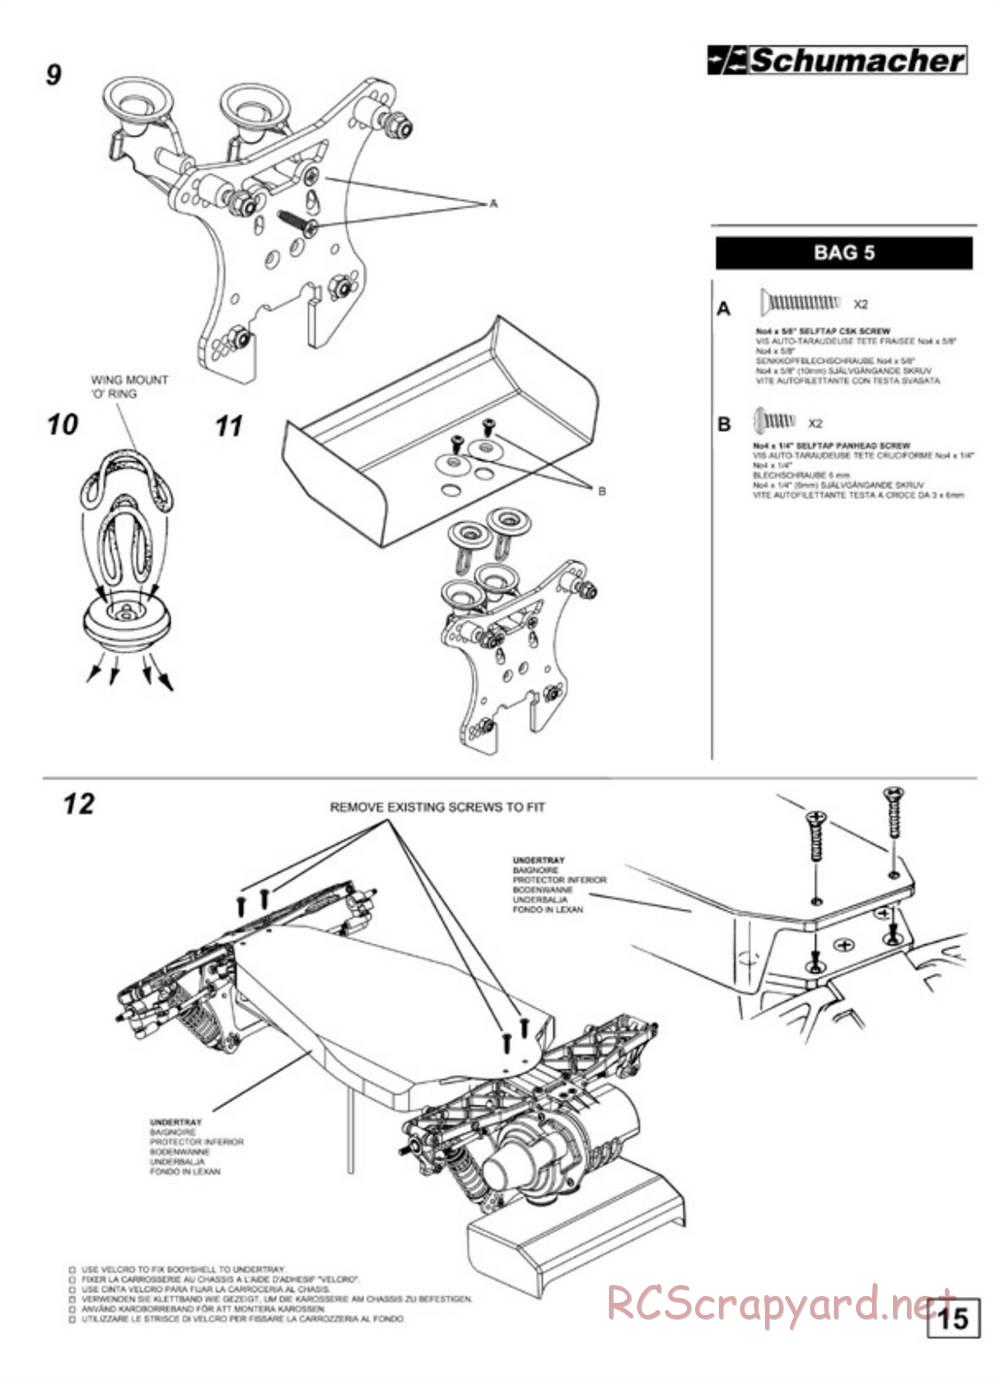 Schumacher - Fireblade Evo - Manual - Page 17